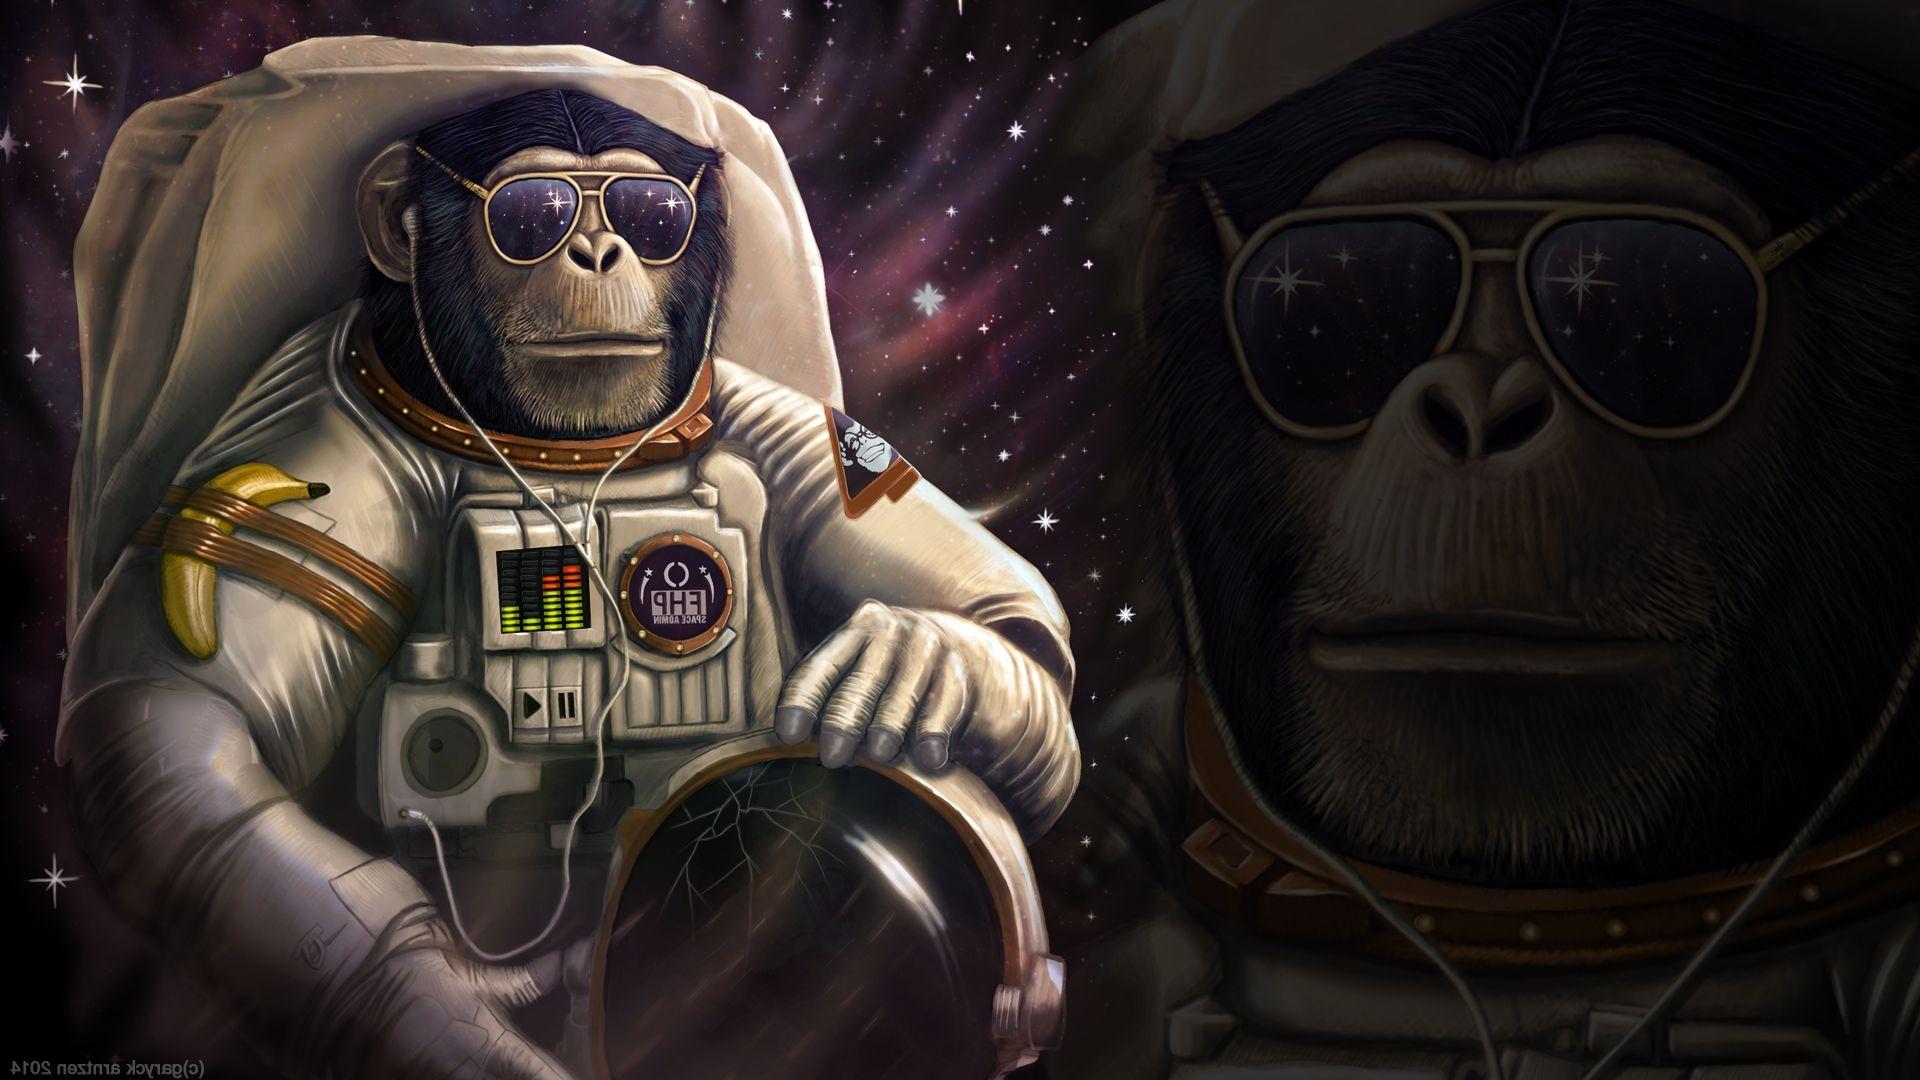 Wallpaper, 1920x1080 px, astronaut, banana, monkey, sunglasses